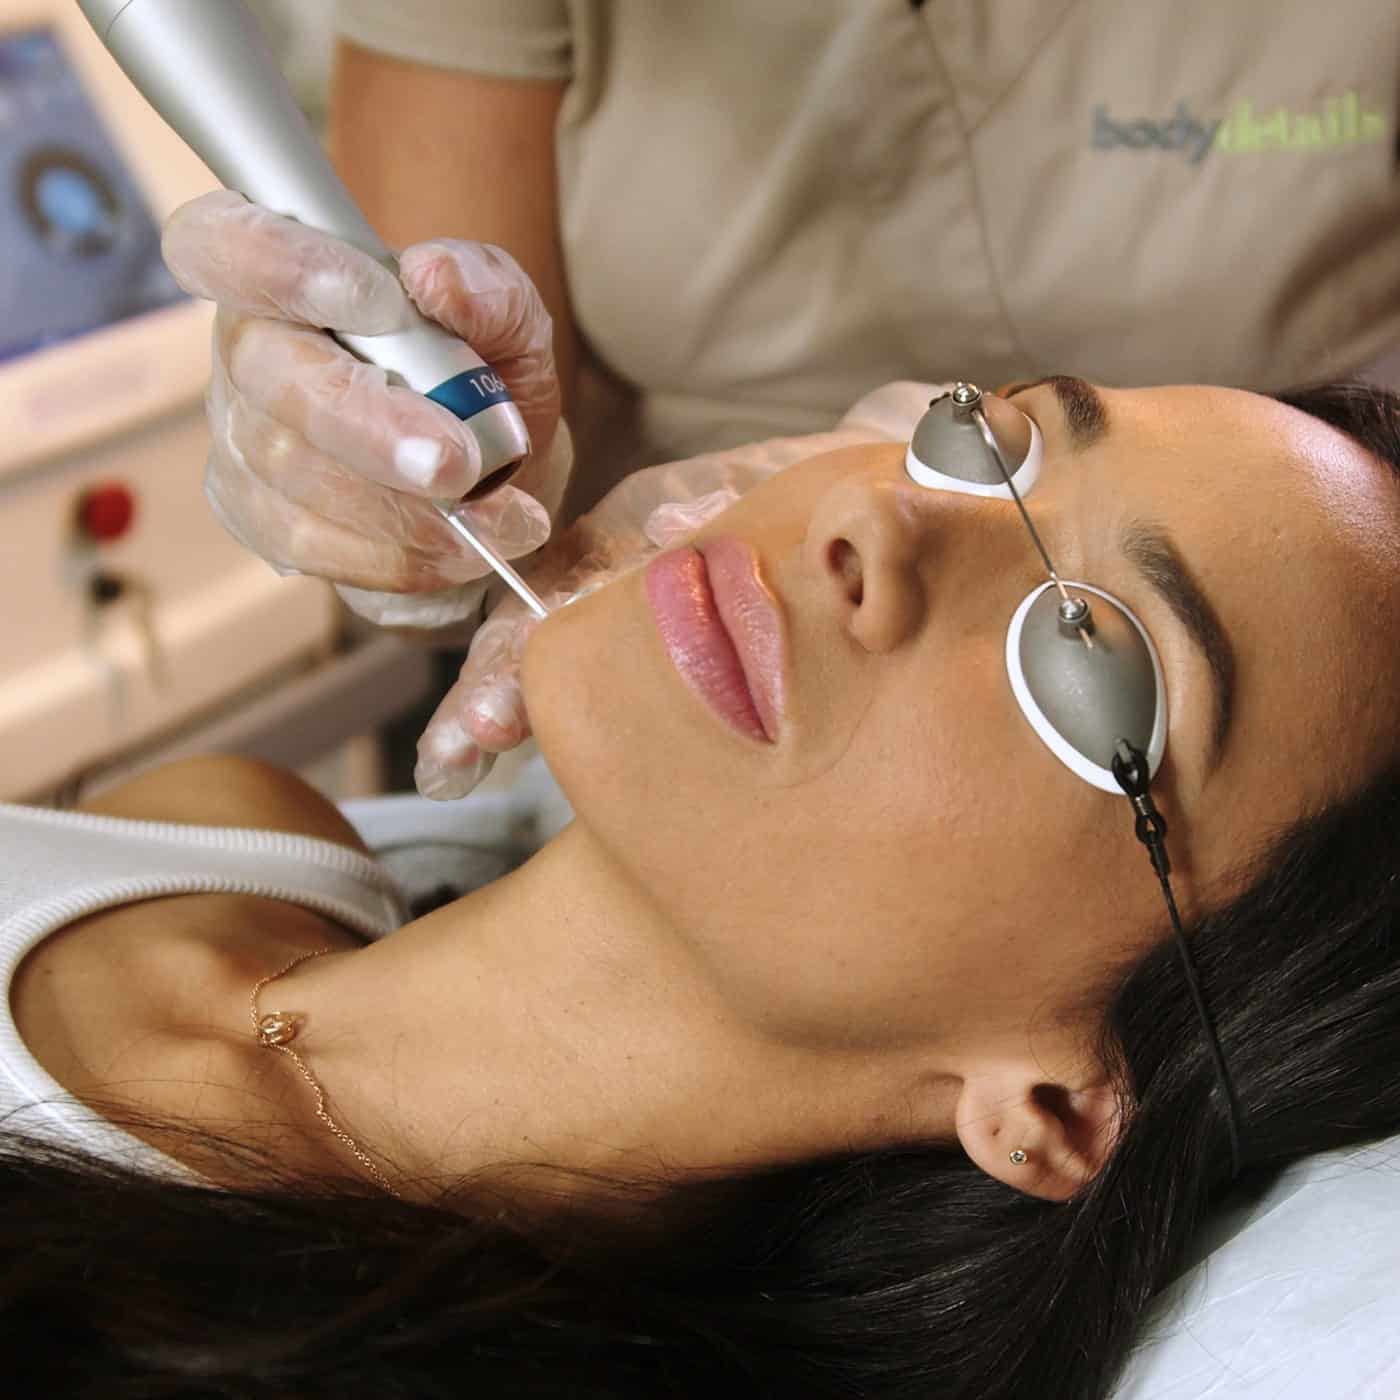 woman smiling during laser skin rejuvenation treatment